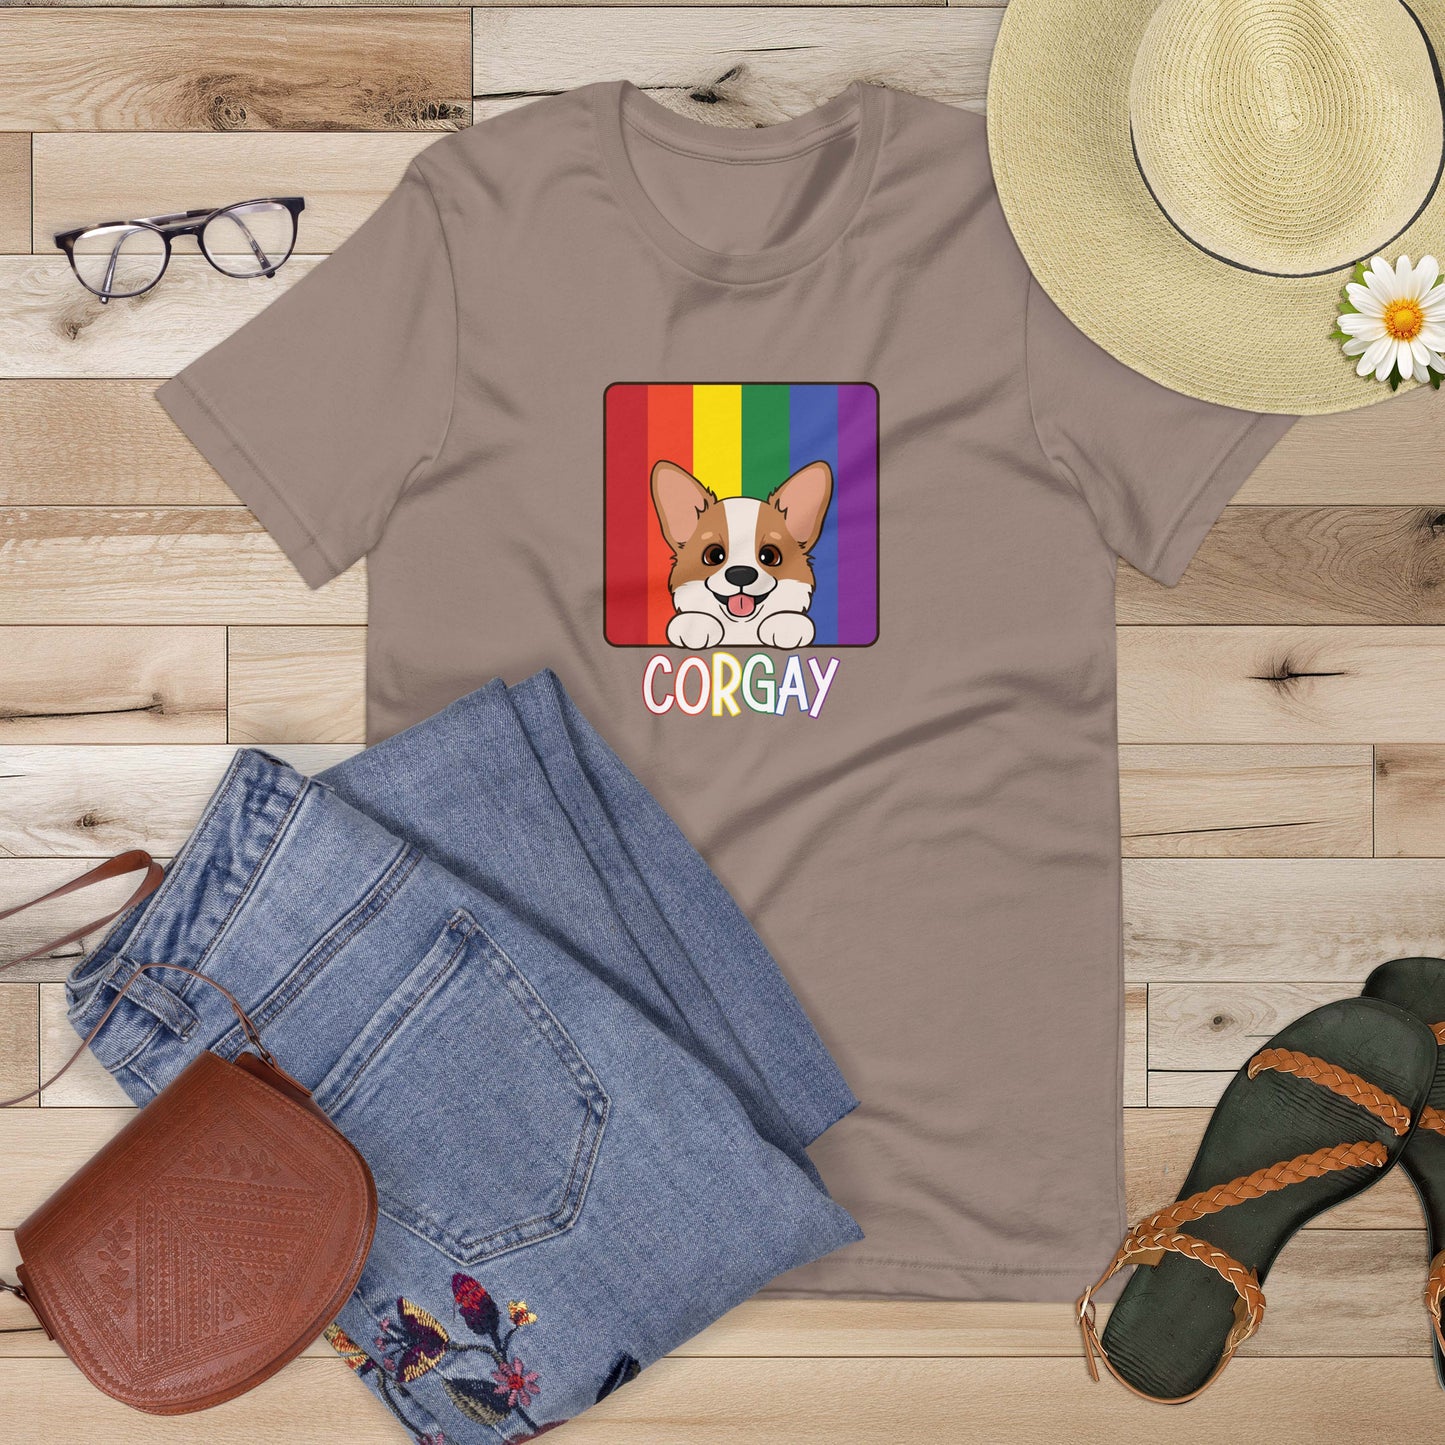 Corgay Unisex T-shirt